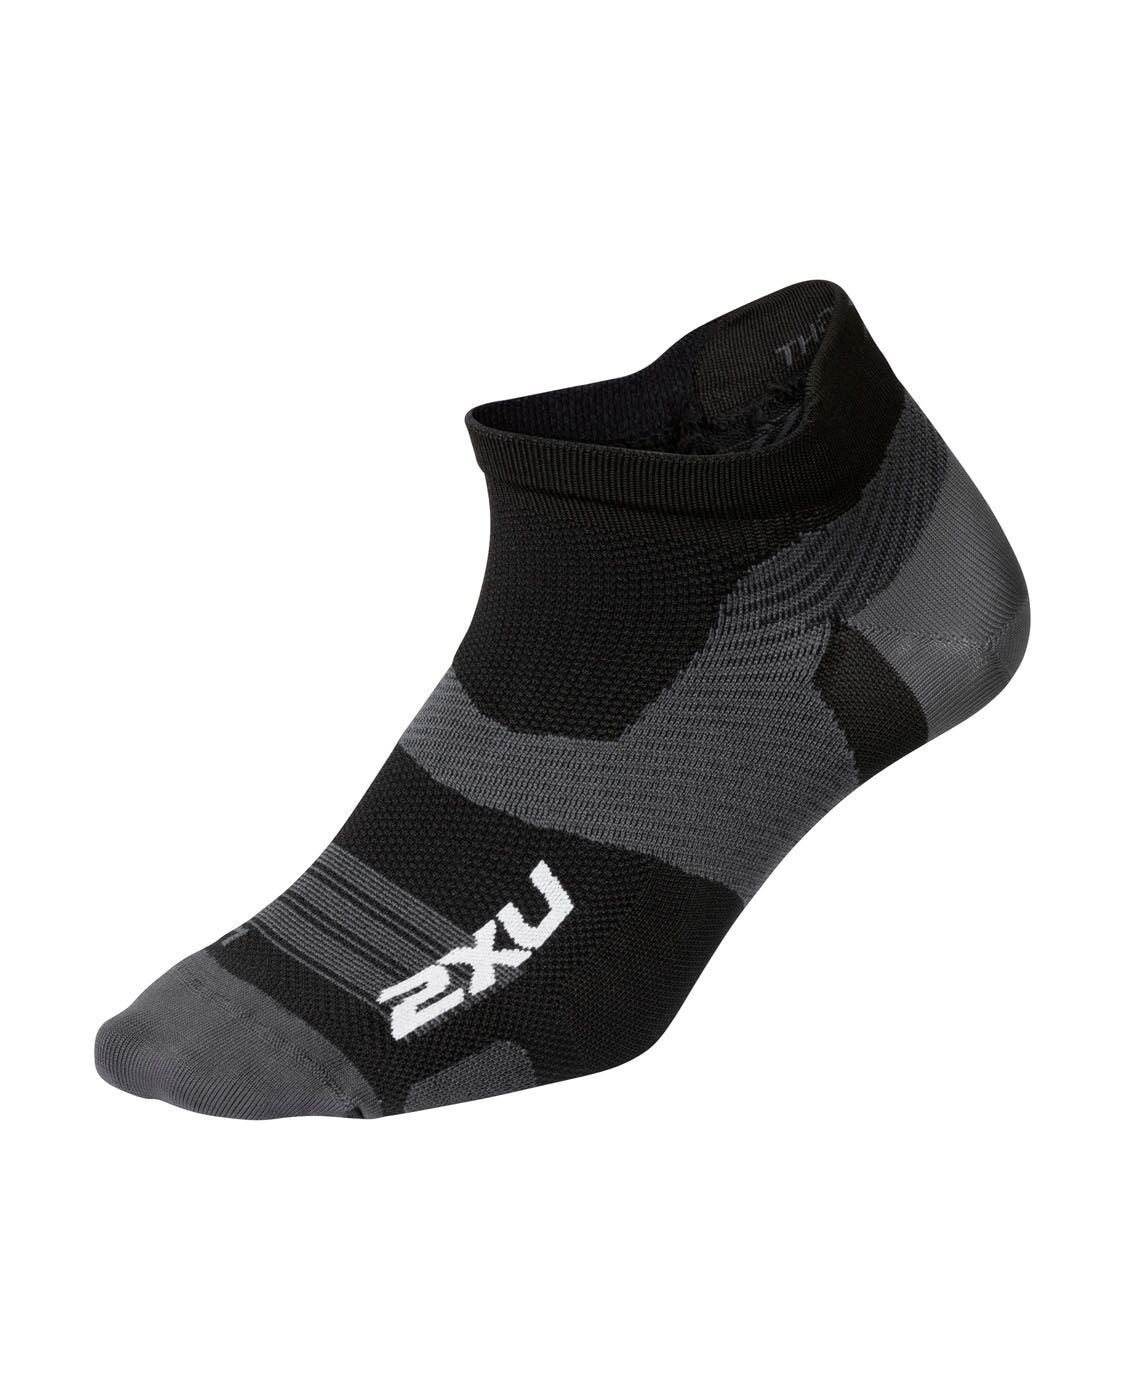 2XU South Africa - Vectr Ultralight No Show Socks - Black/Titanium